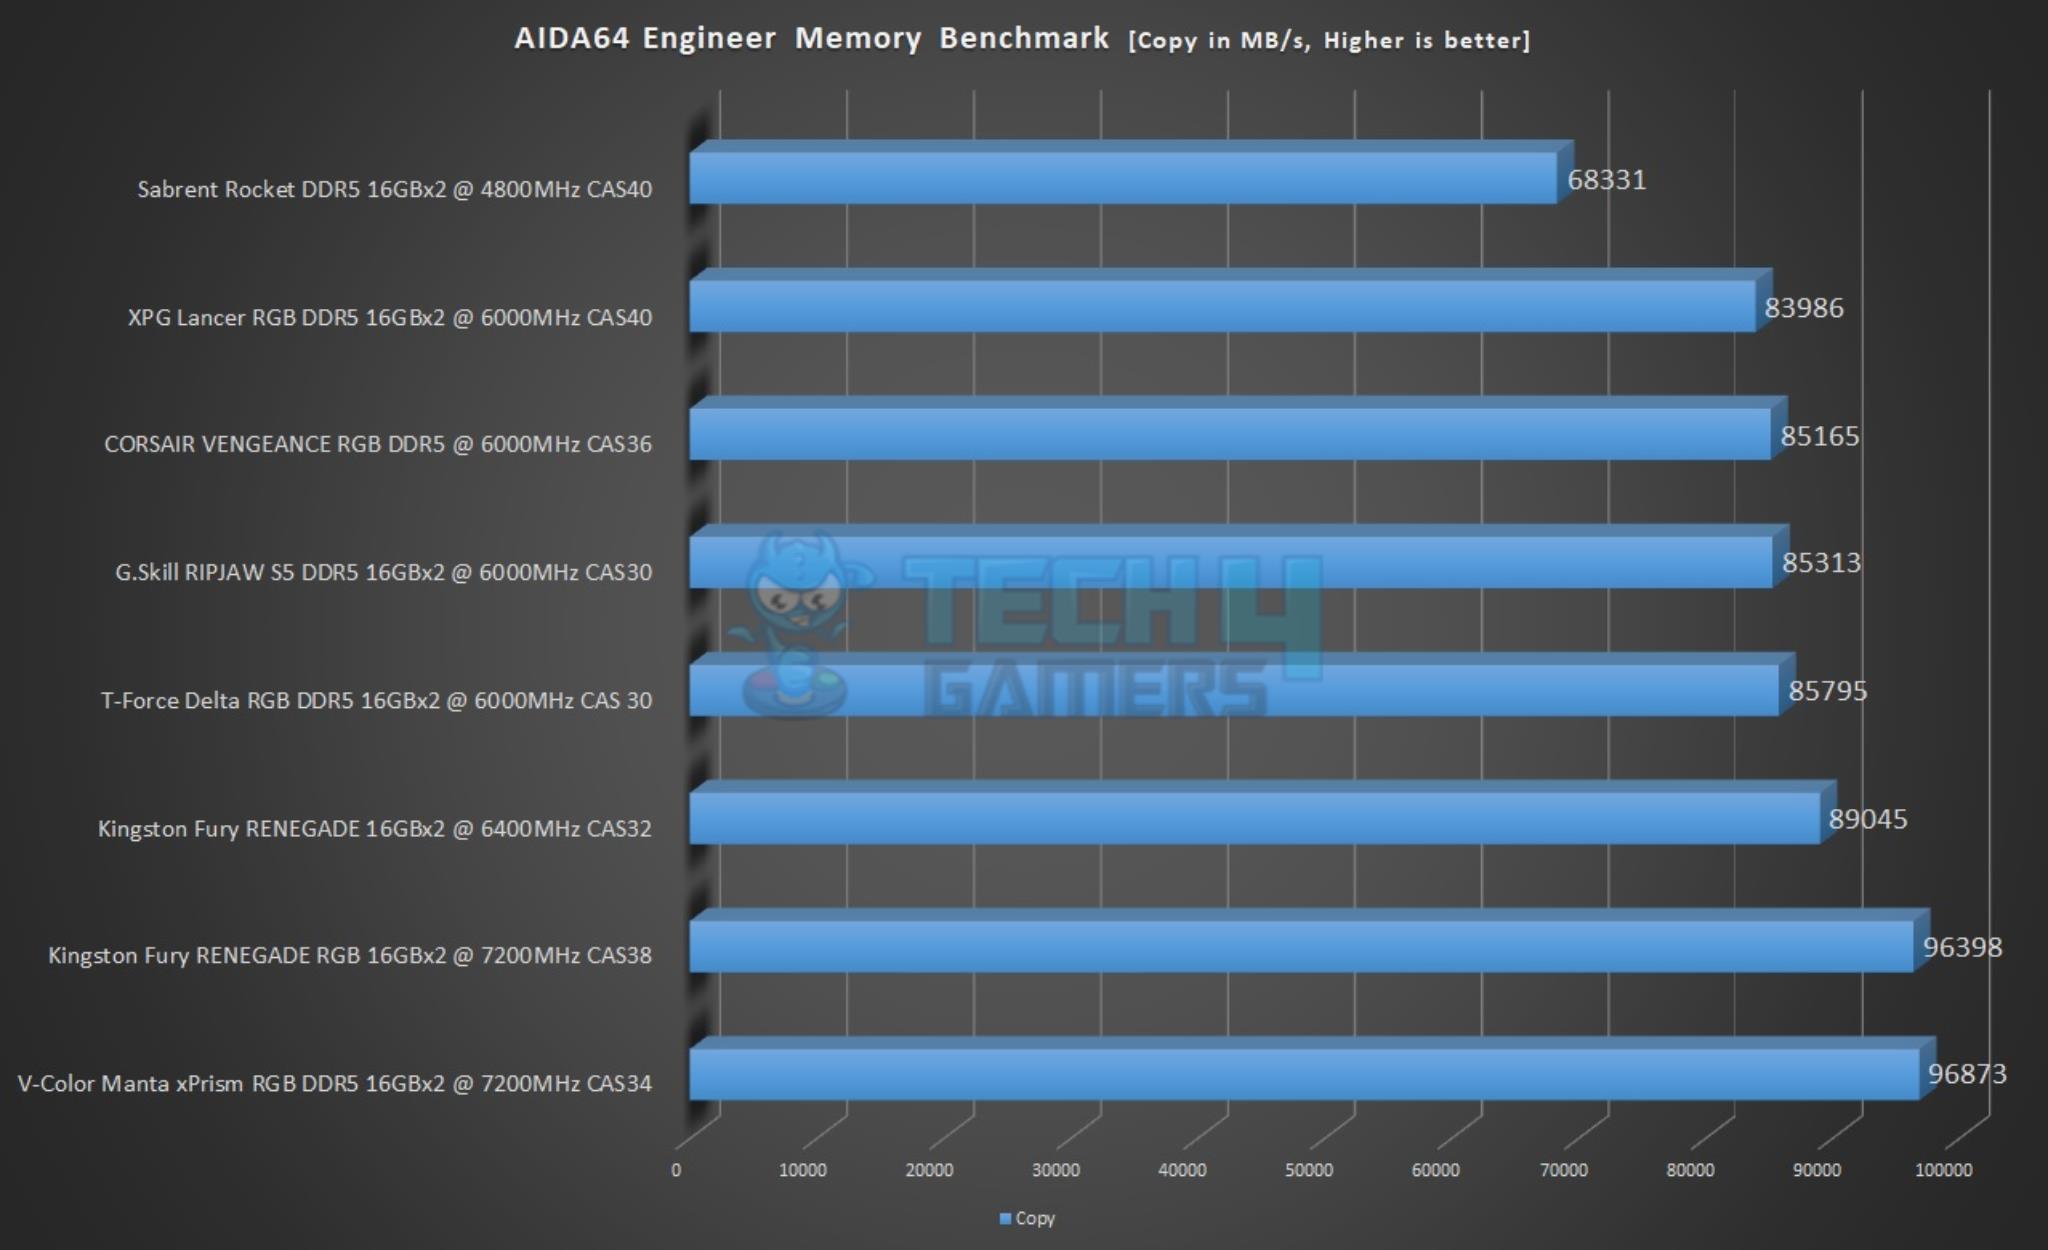 V-Color Manta xPrism RGB DDR5 32GB — AIDA64 Memory Copy Benchmark